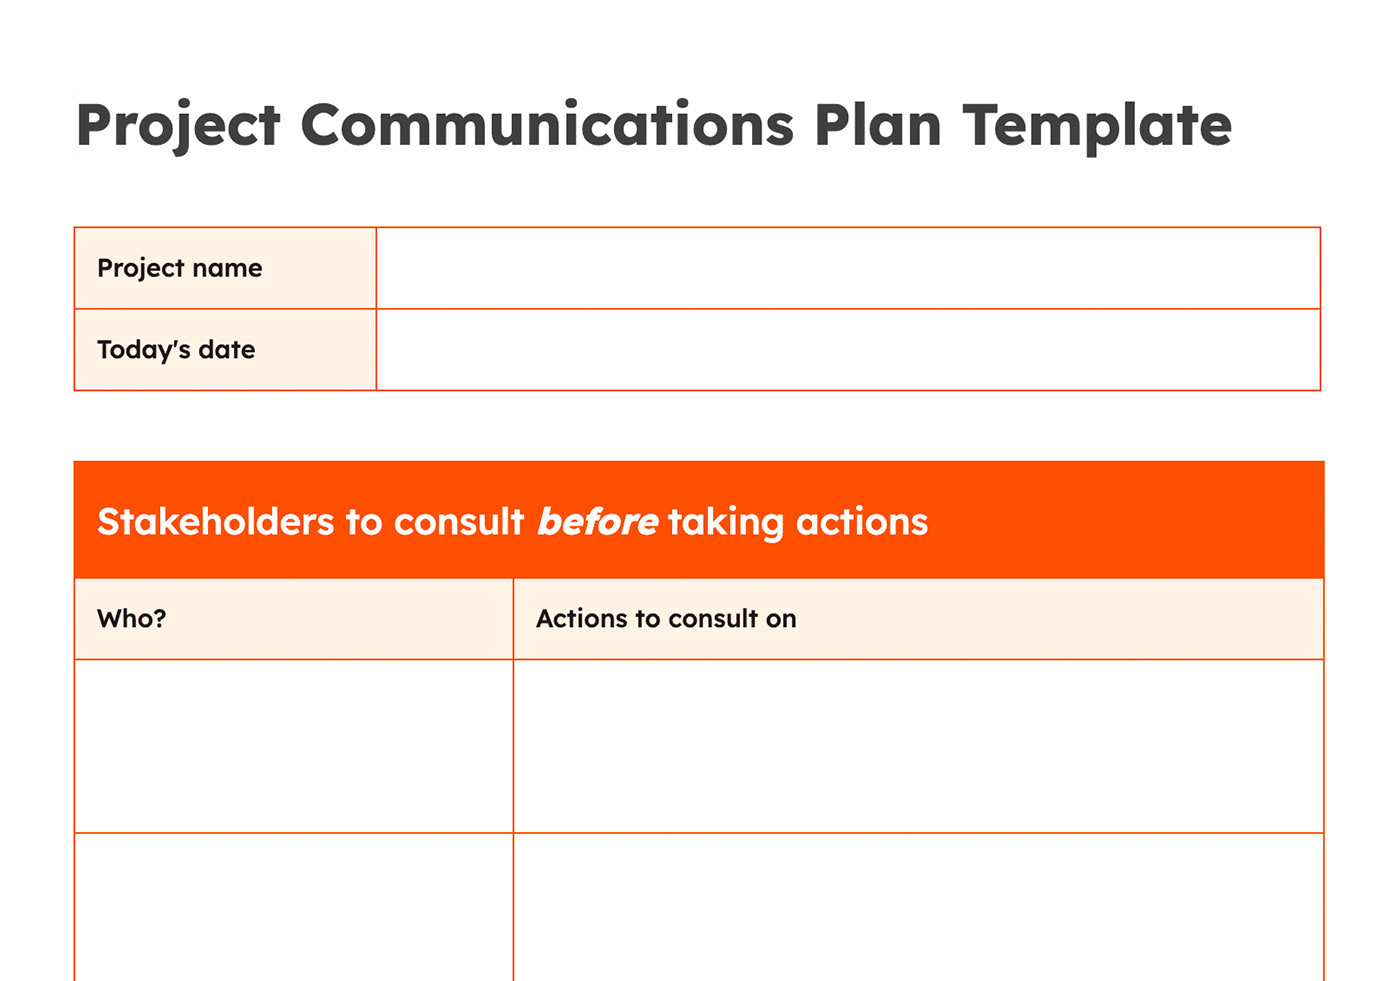 Screenshot of a communications plan project template